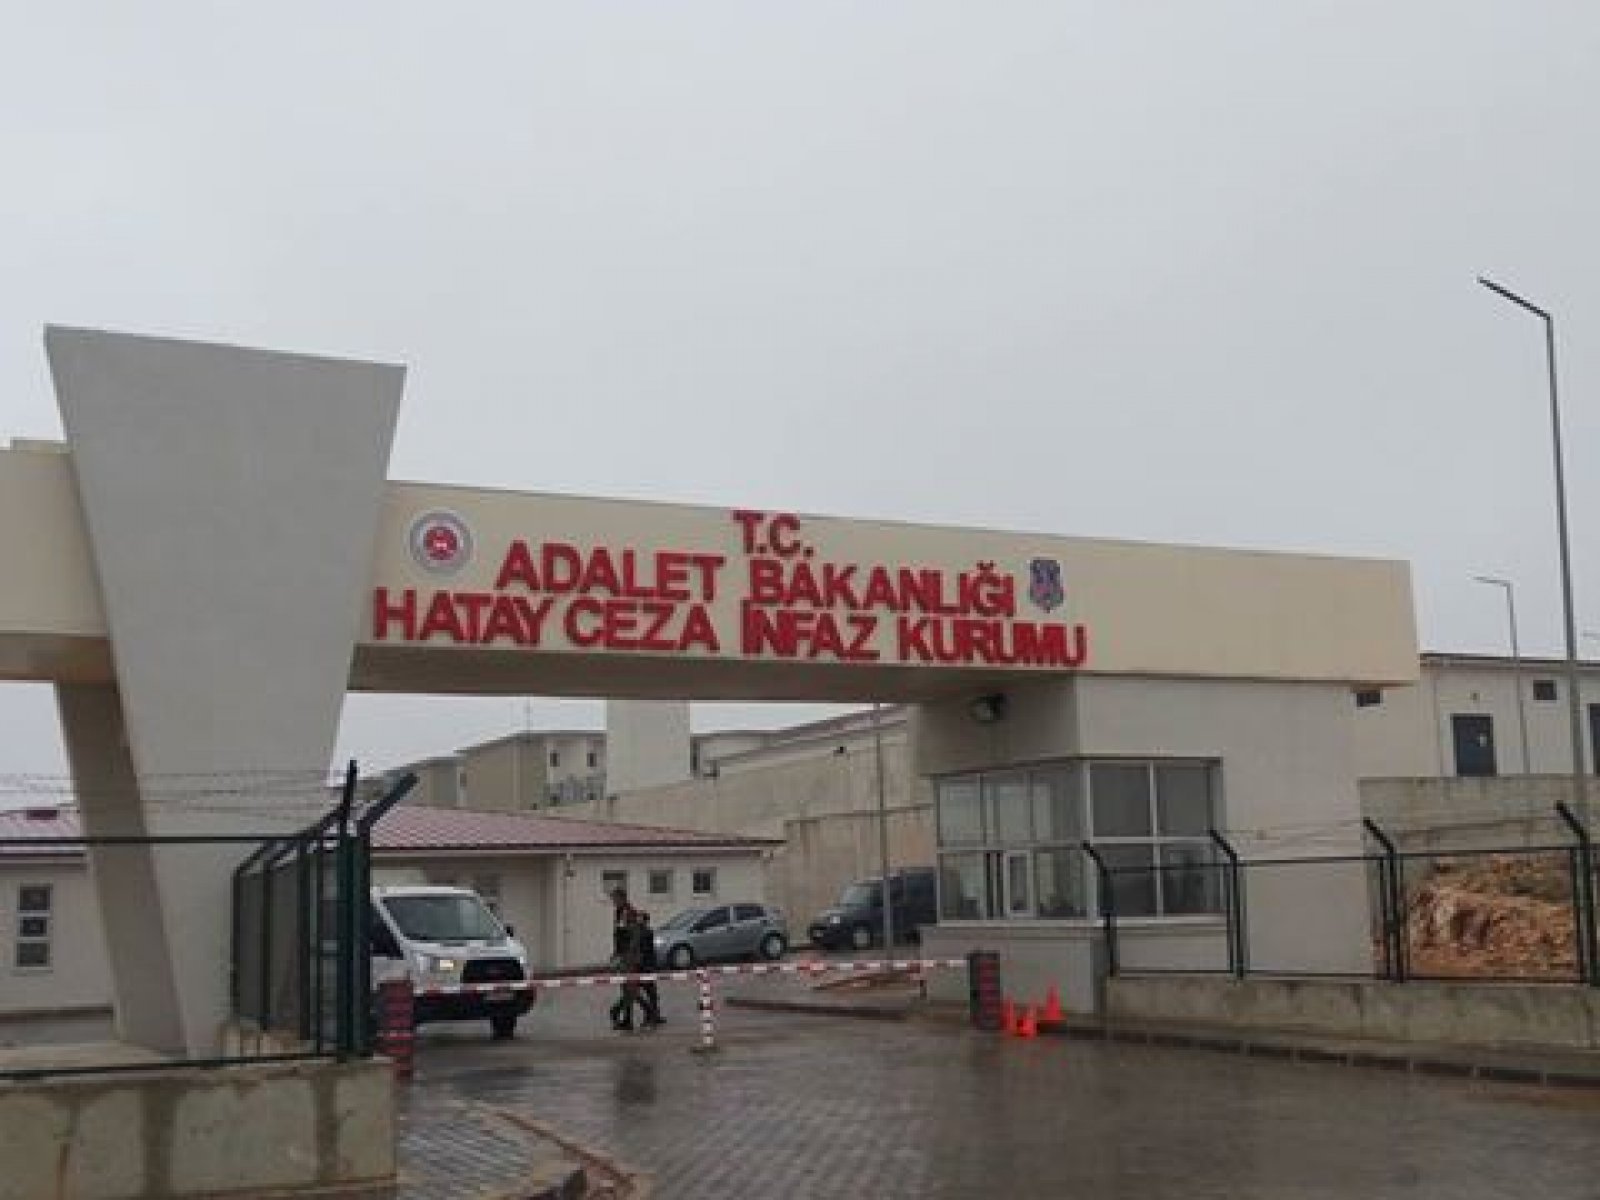 Hatay Prison